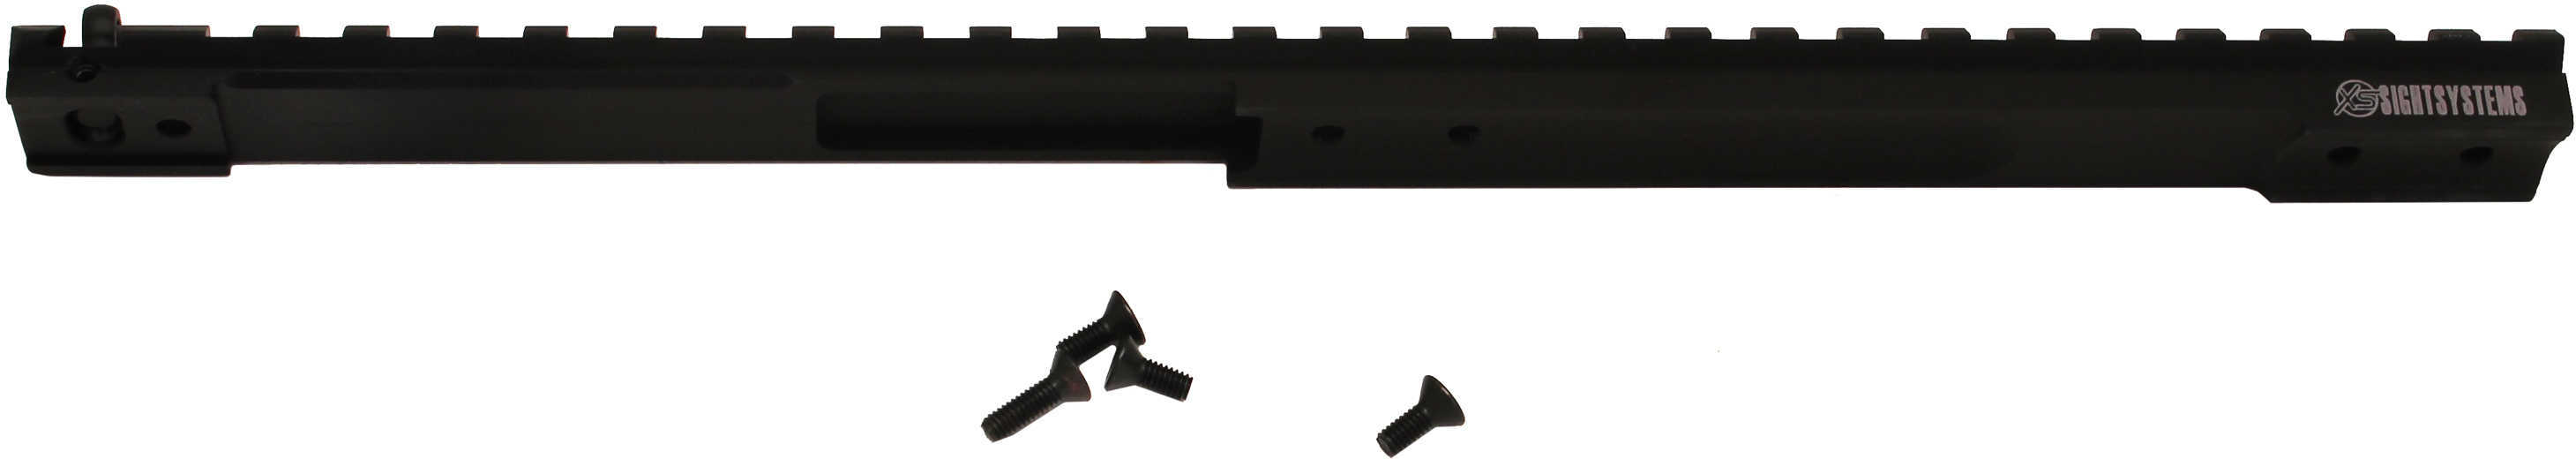 XS Sights Rail Fits Ruger Gunsite Scout Rifle with Aperture Black Finish RU-5000R-N